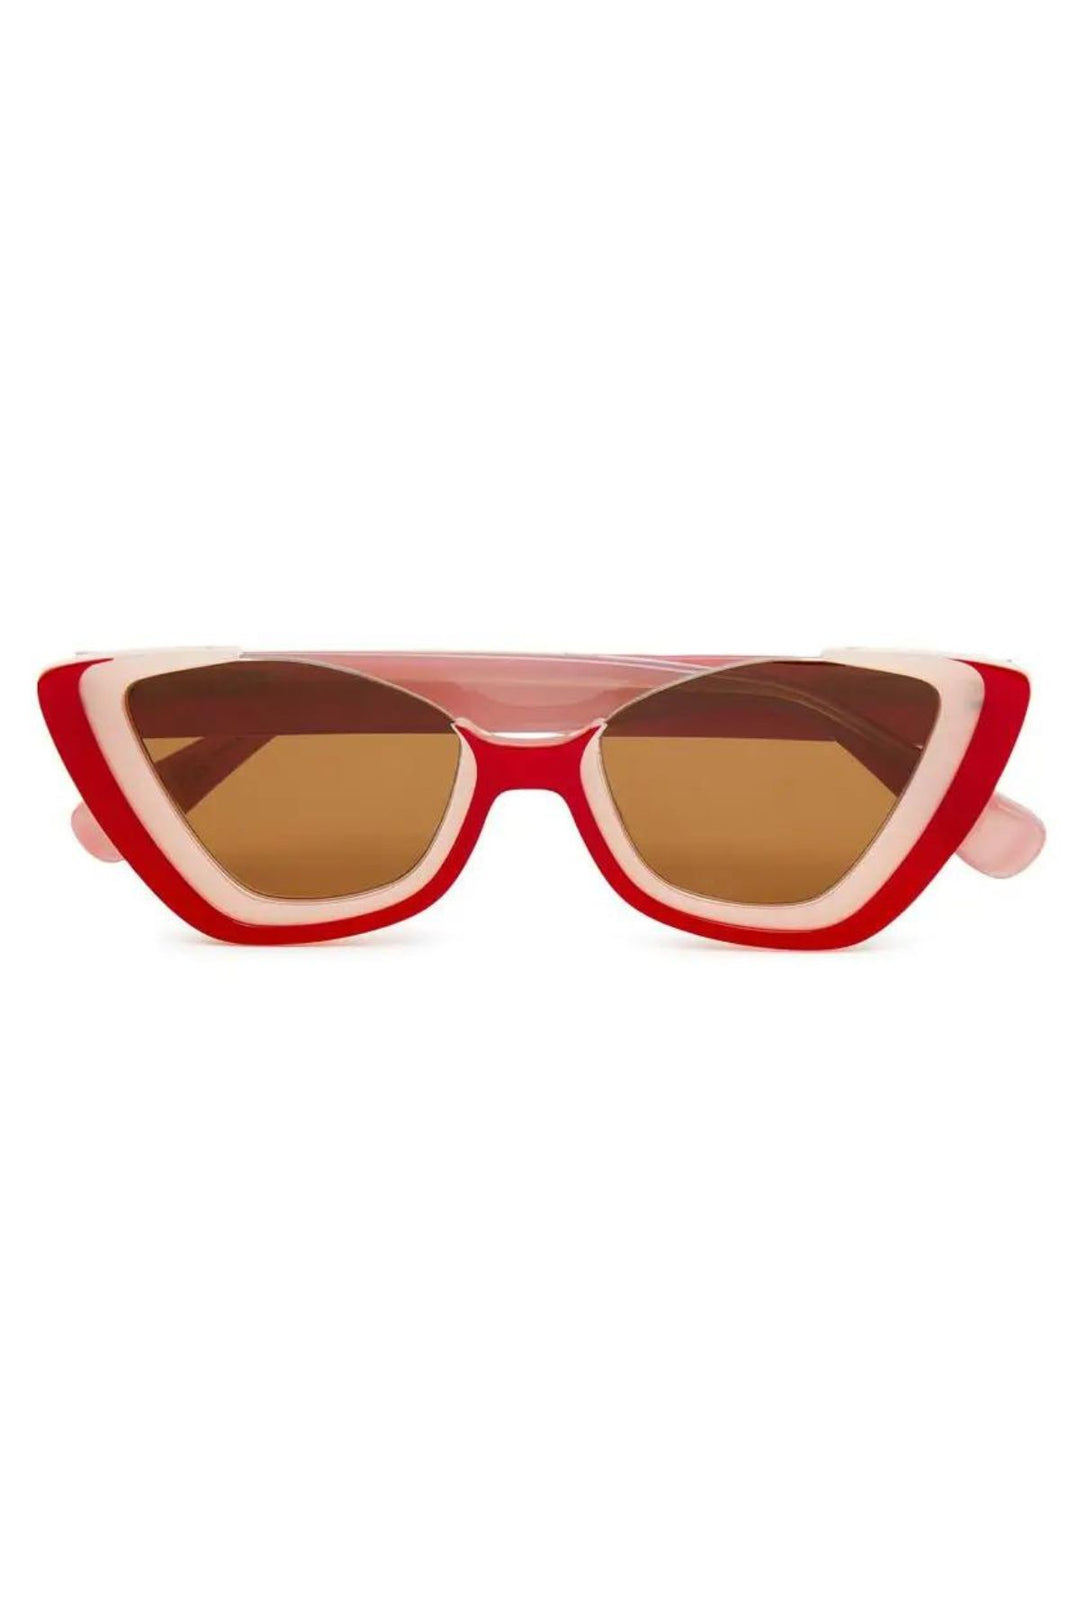 LELE SADOUGHI: Scarlet Brickell Cat Eye Sunglasses